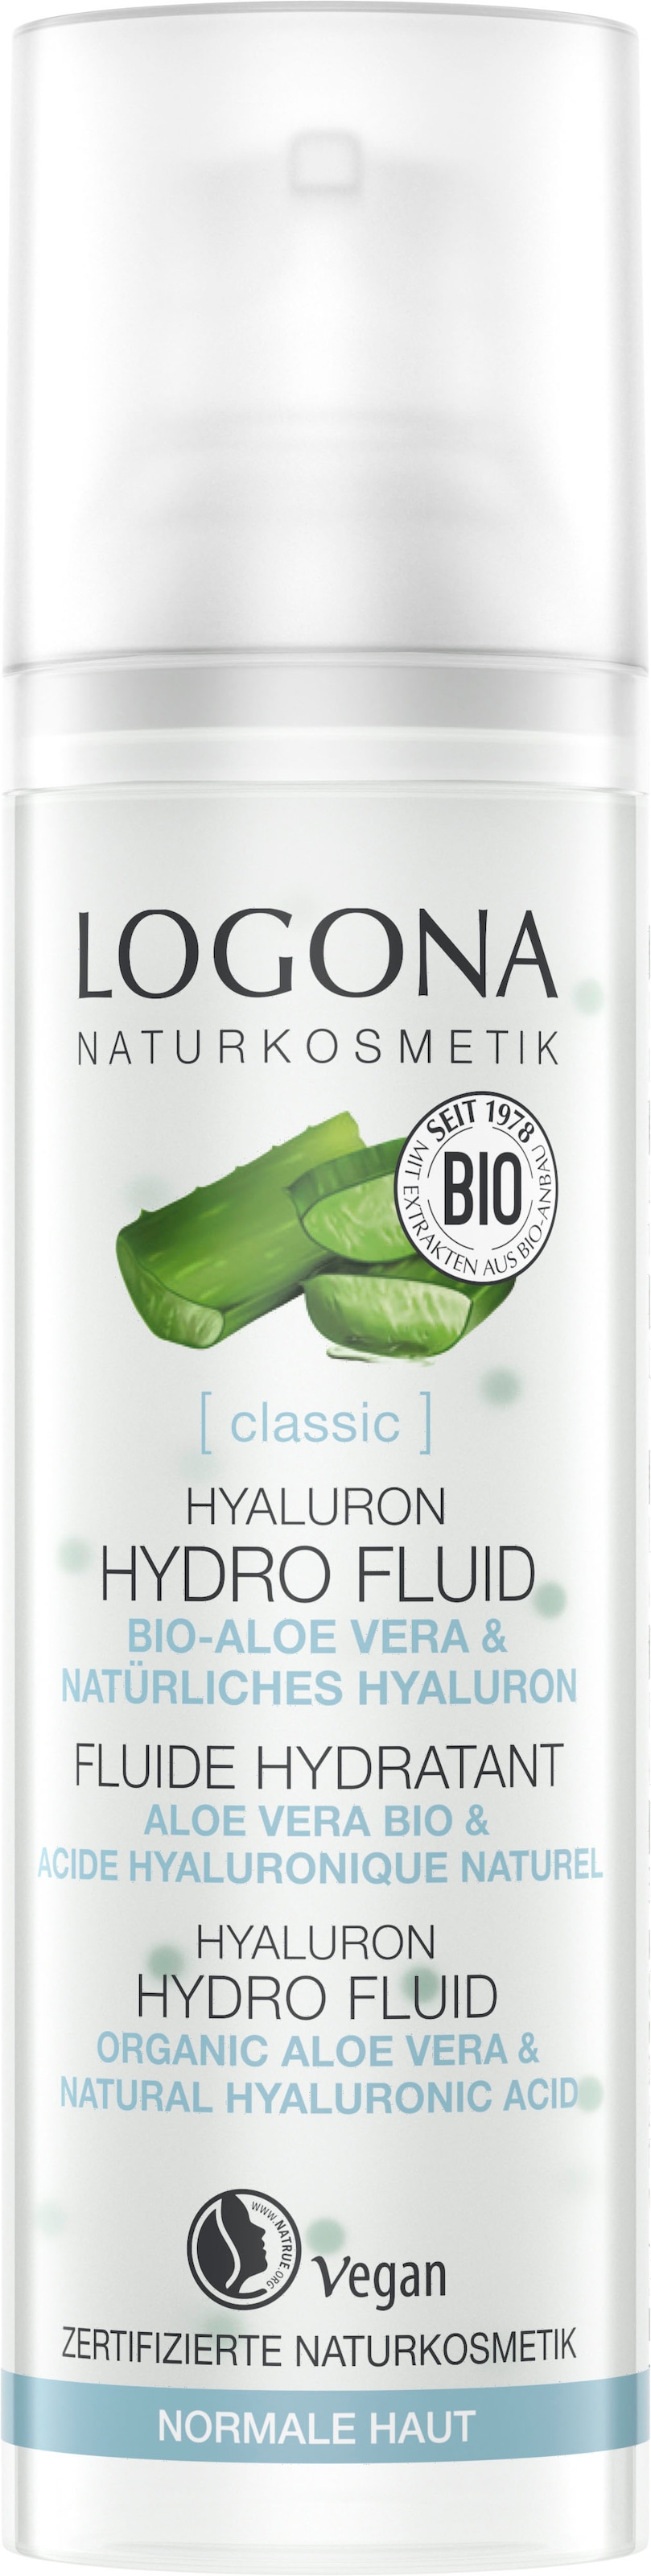 classic Hydro bei LOGONA Gesichtsfluid »Logona ♕ Hyaluron Fluid«